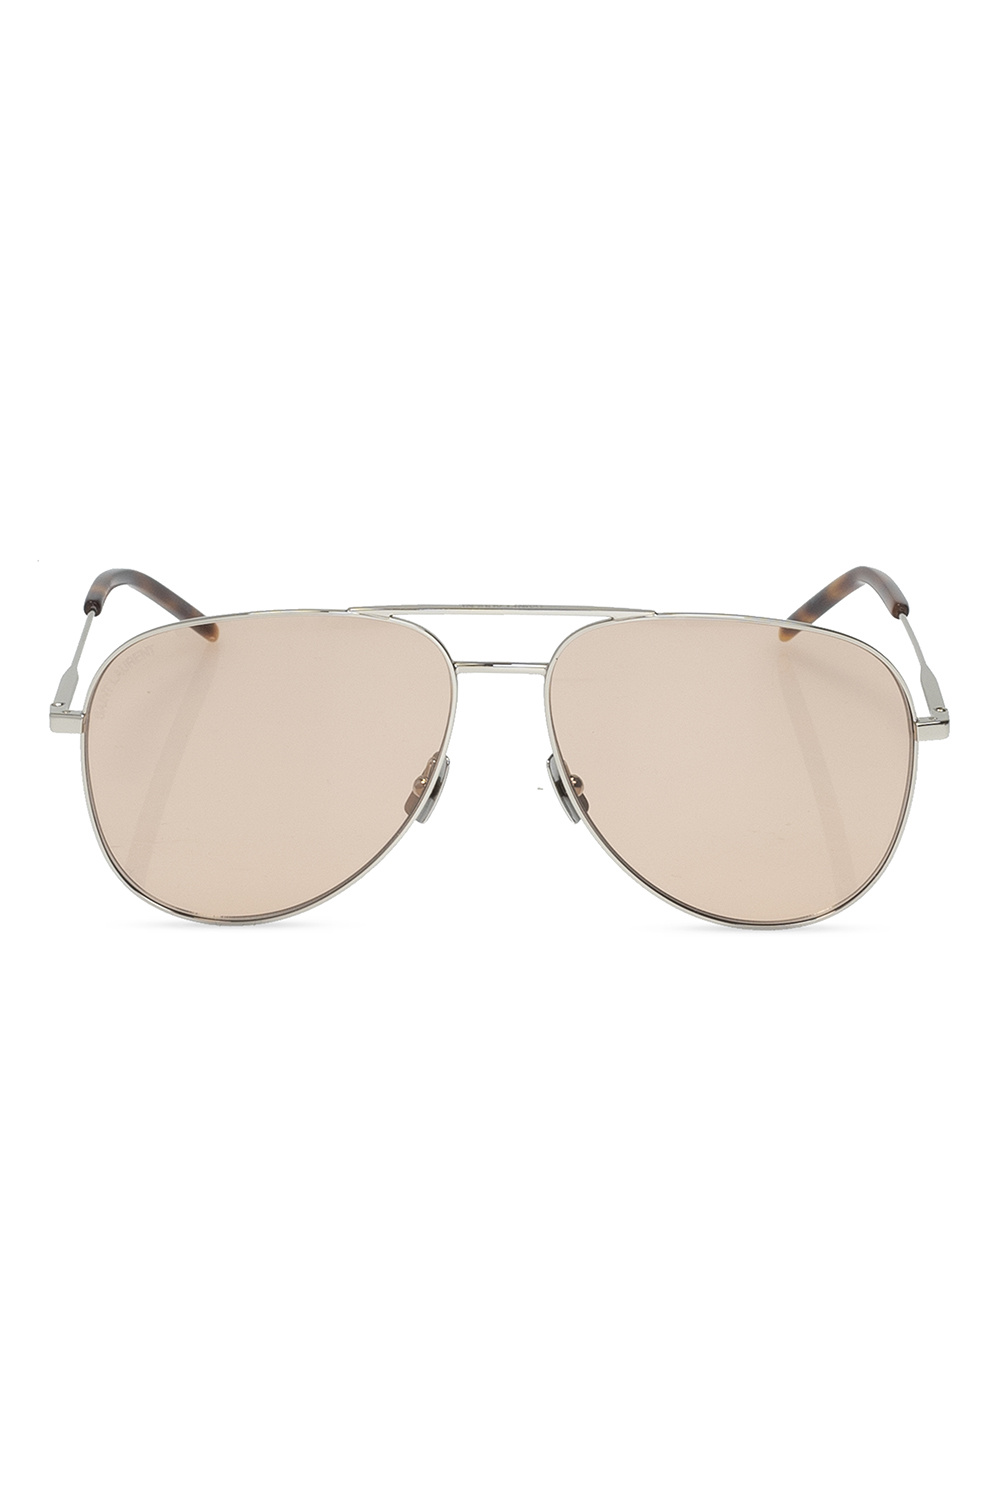 Saint Laurent ‘Classic 11’ sunglasses